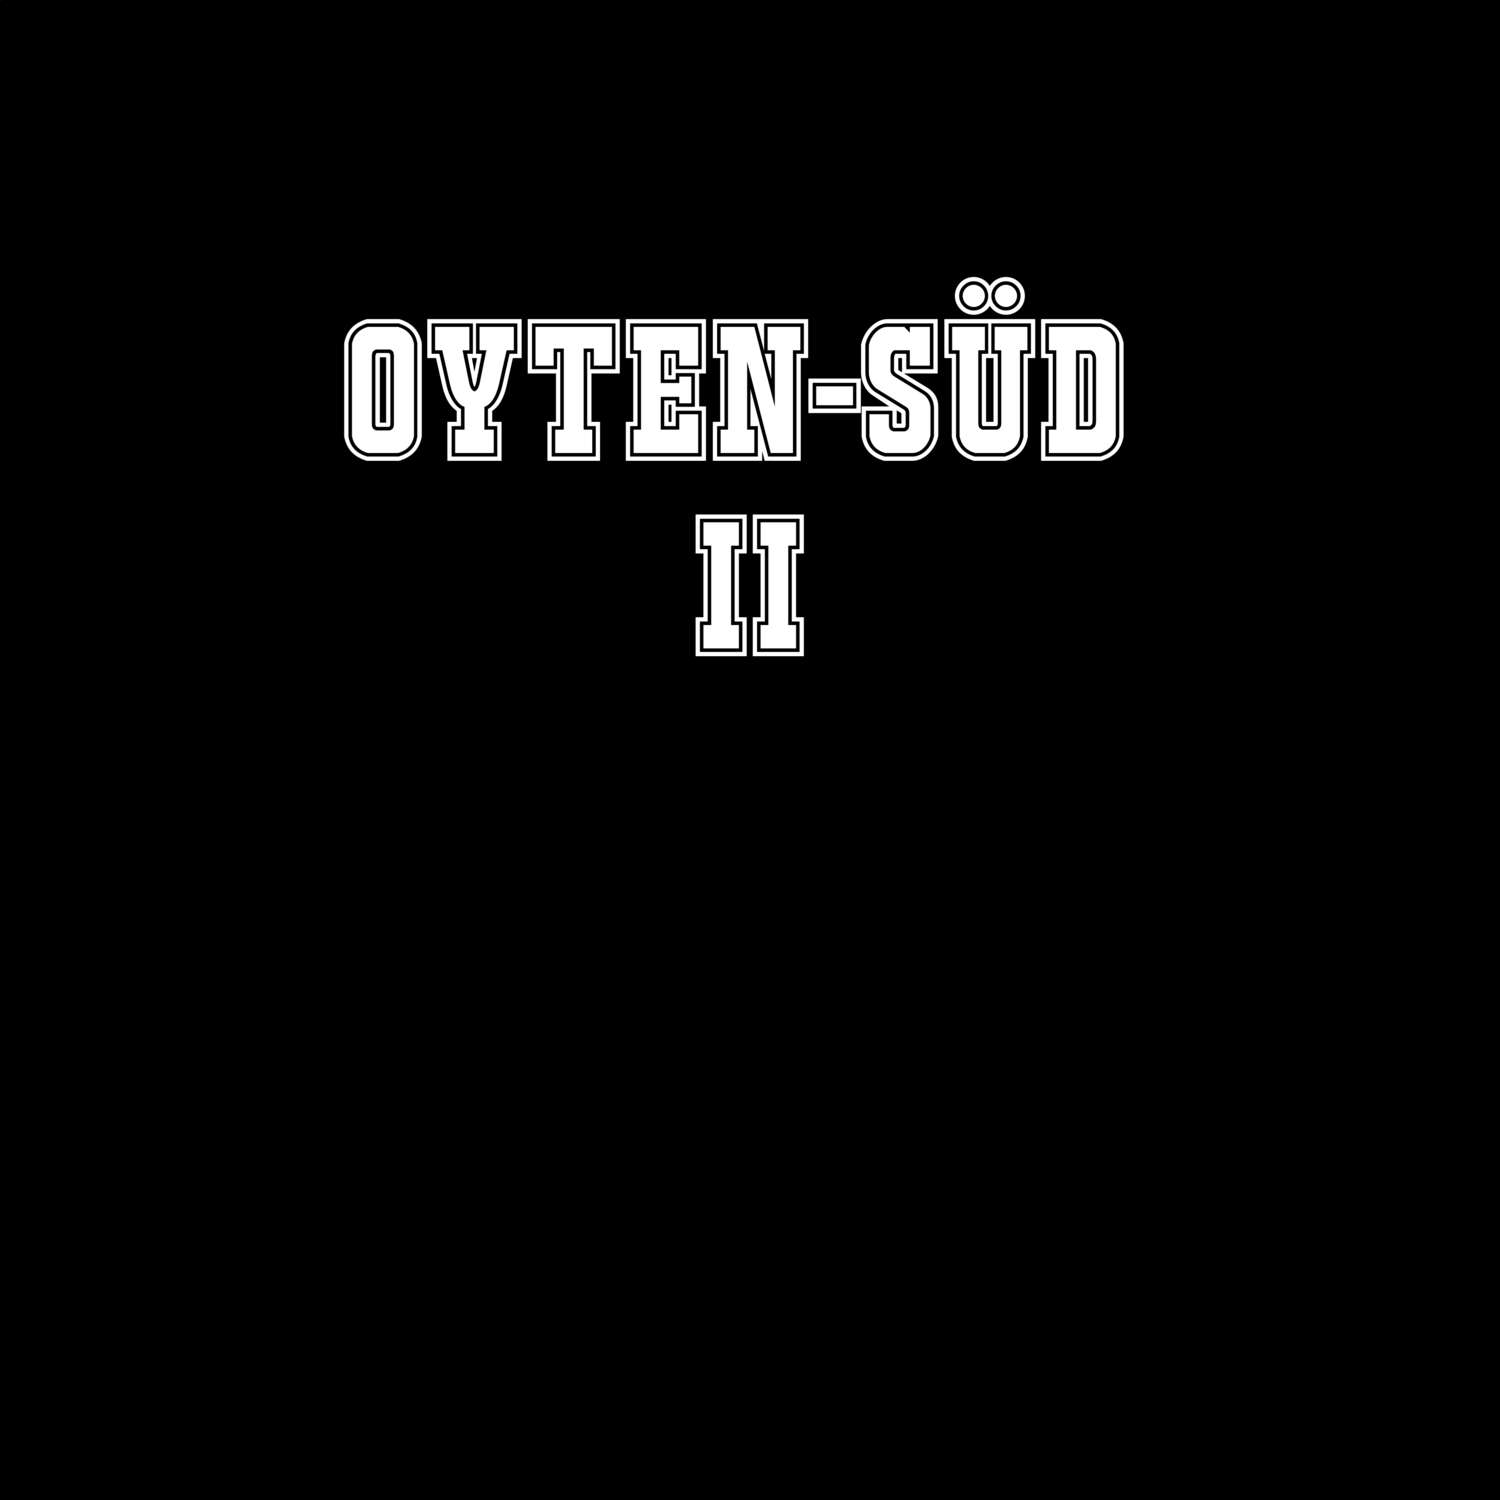 Oyten-Süd II T-Shirt »Classic«